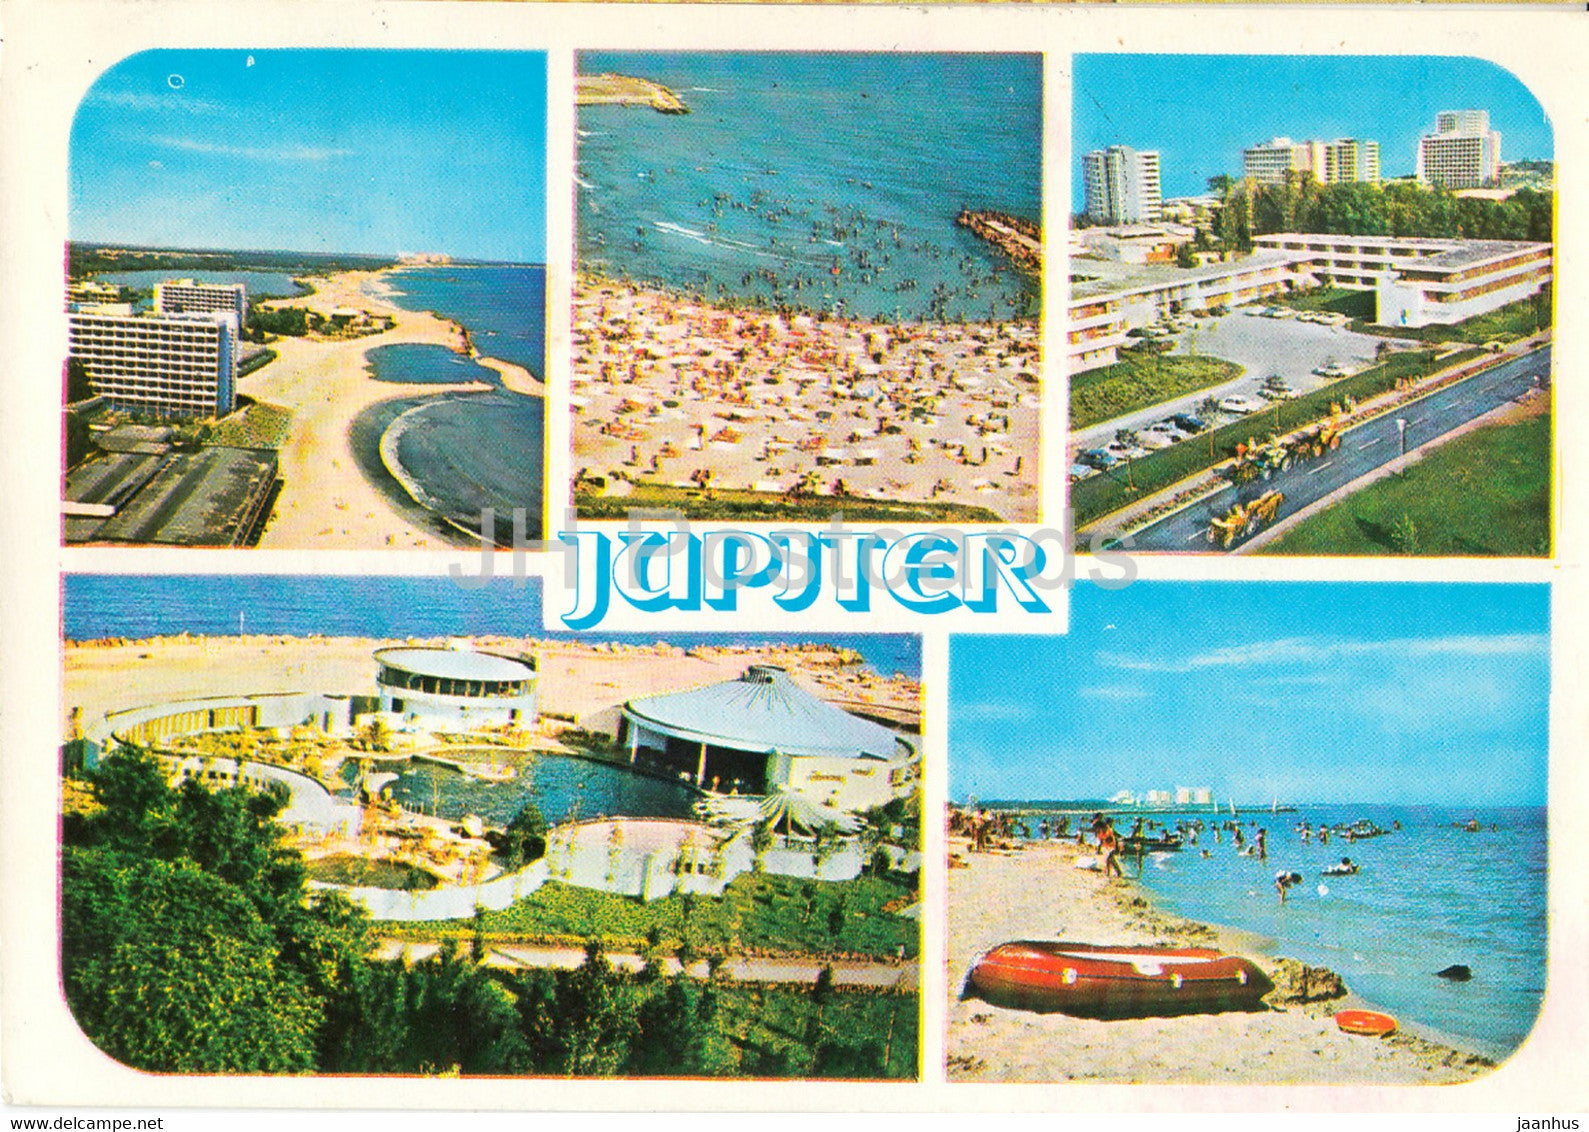 Jupiter - views from the resort - beach - 1968 - Romania - used - JH Postcards